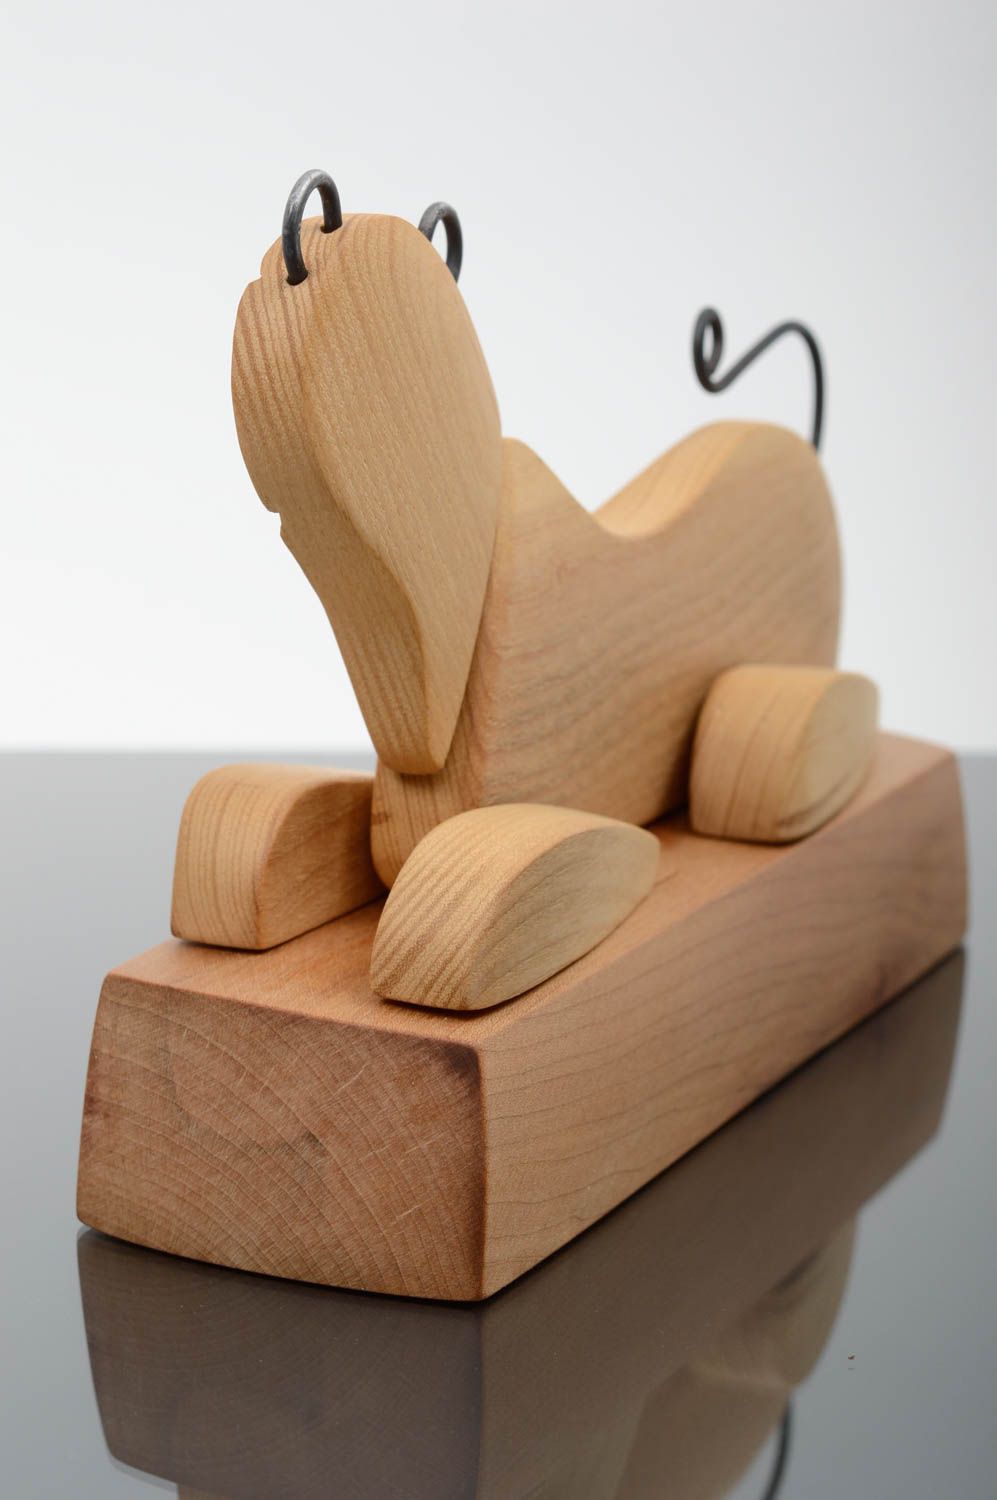 Handmade wood sculpture wooden gifts animal figurines souvenir ideas home decor photo 2